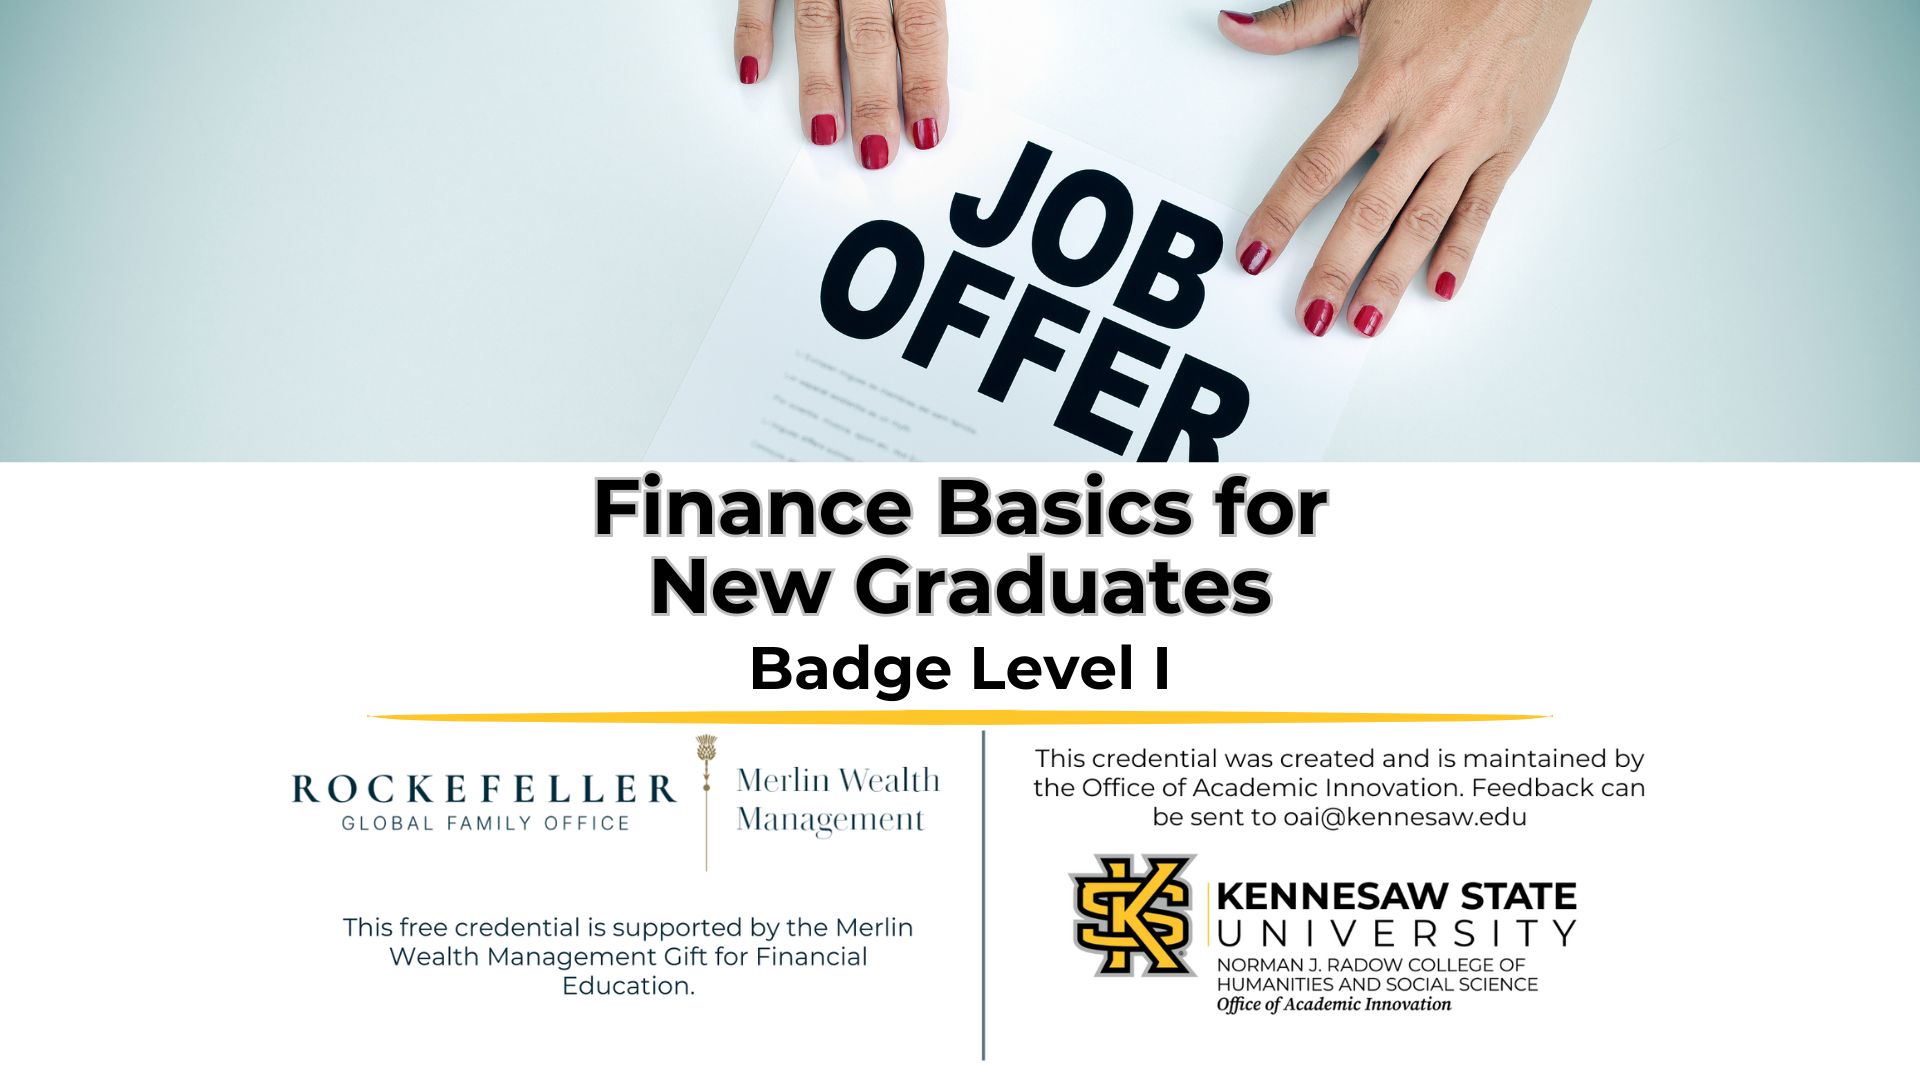 Finance basics for new grads cover image